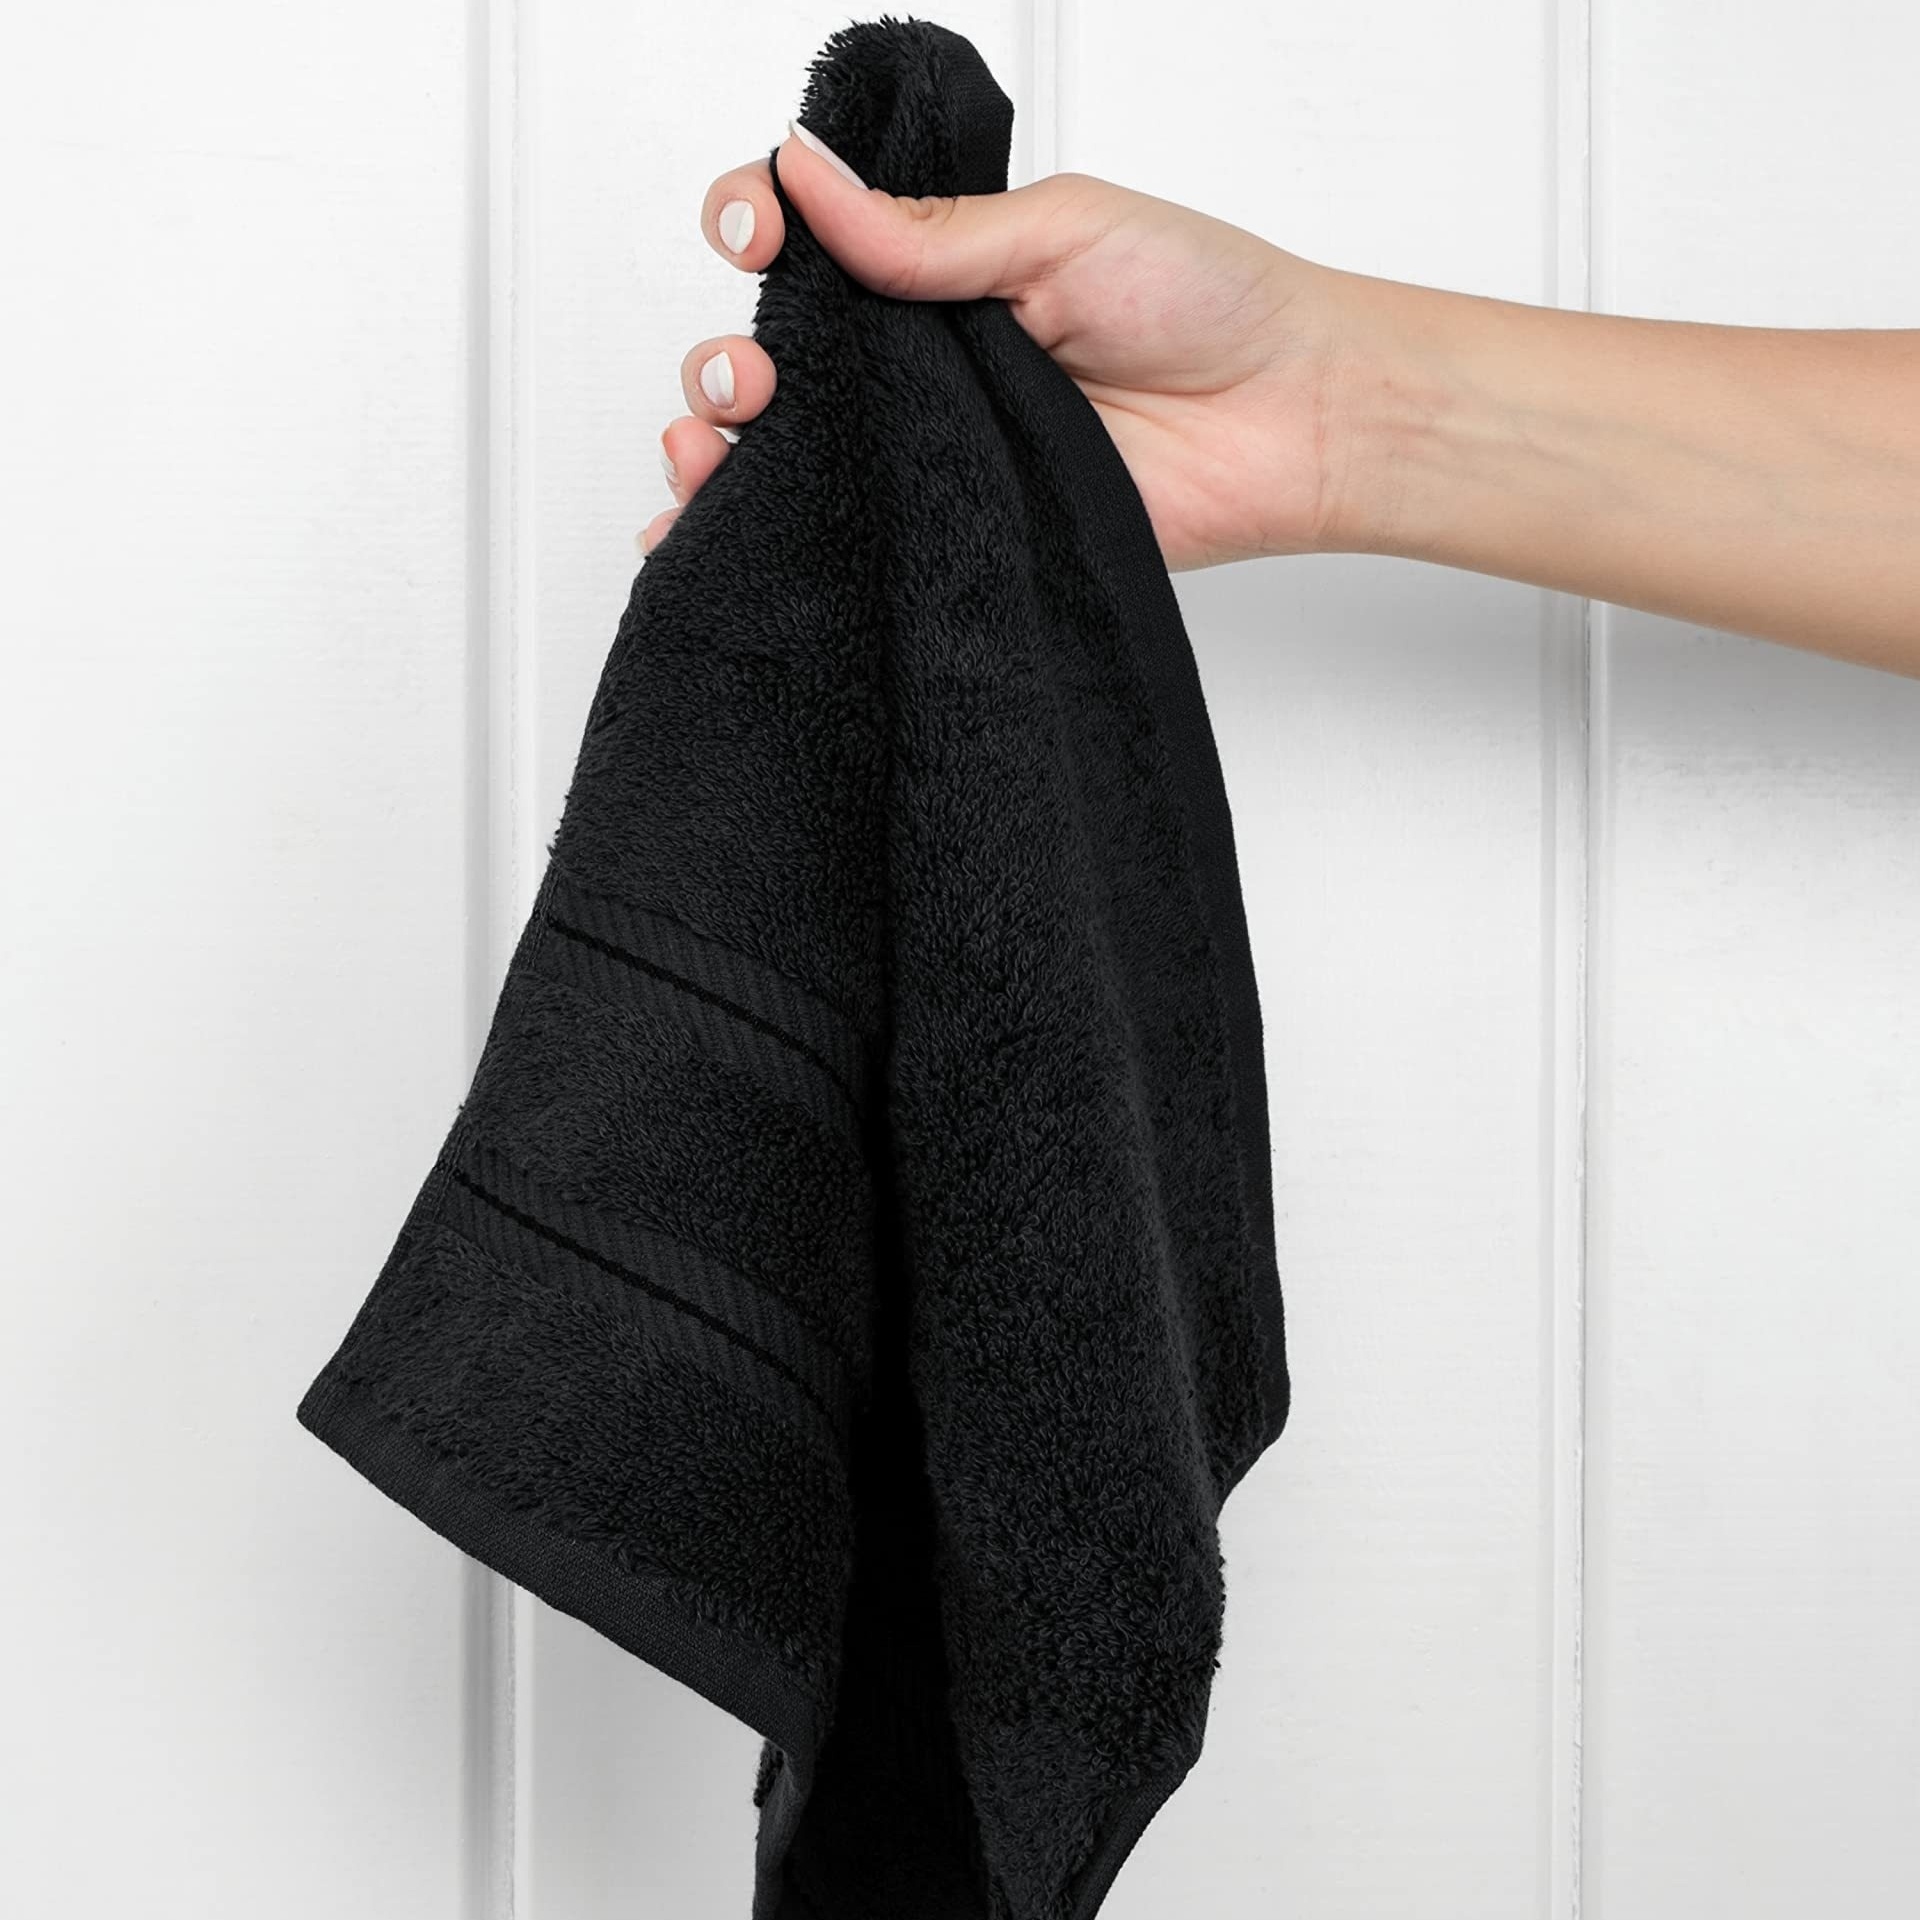 TRIDENT Black Towel Set, 1 Black Bath Towel, 1 Black Hand Towel, 1 Black  Wash Cloths, Soft Absorbent Bathroom Towels, Cotton Towel Set, Black  Bathroom